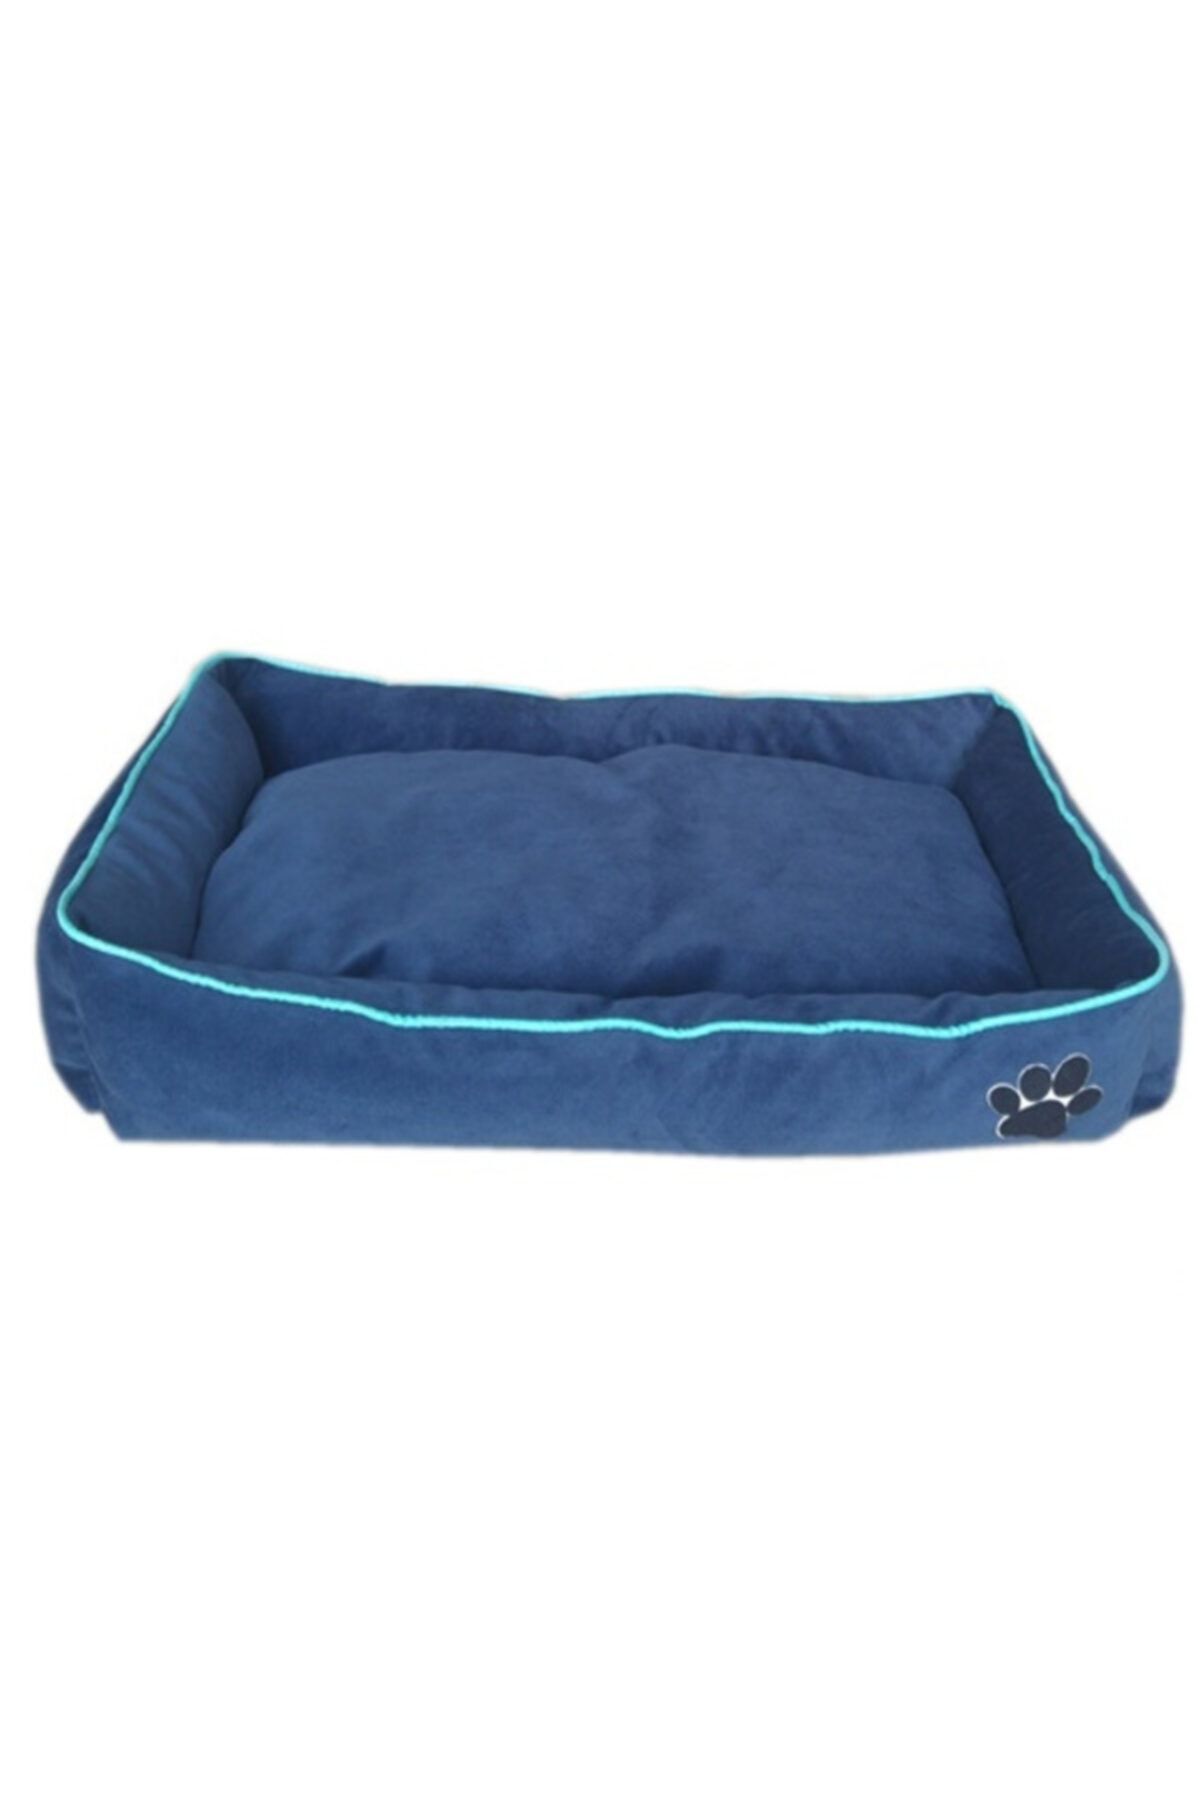 DIGERUI Nohov Tay Tüyü Köpek Yatağı Medium 15*60*80 Cm Mavi